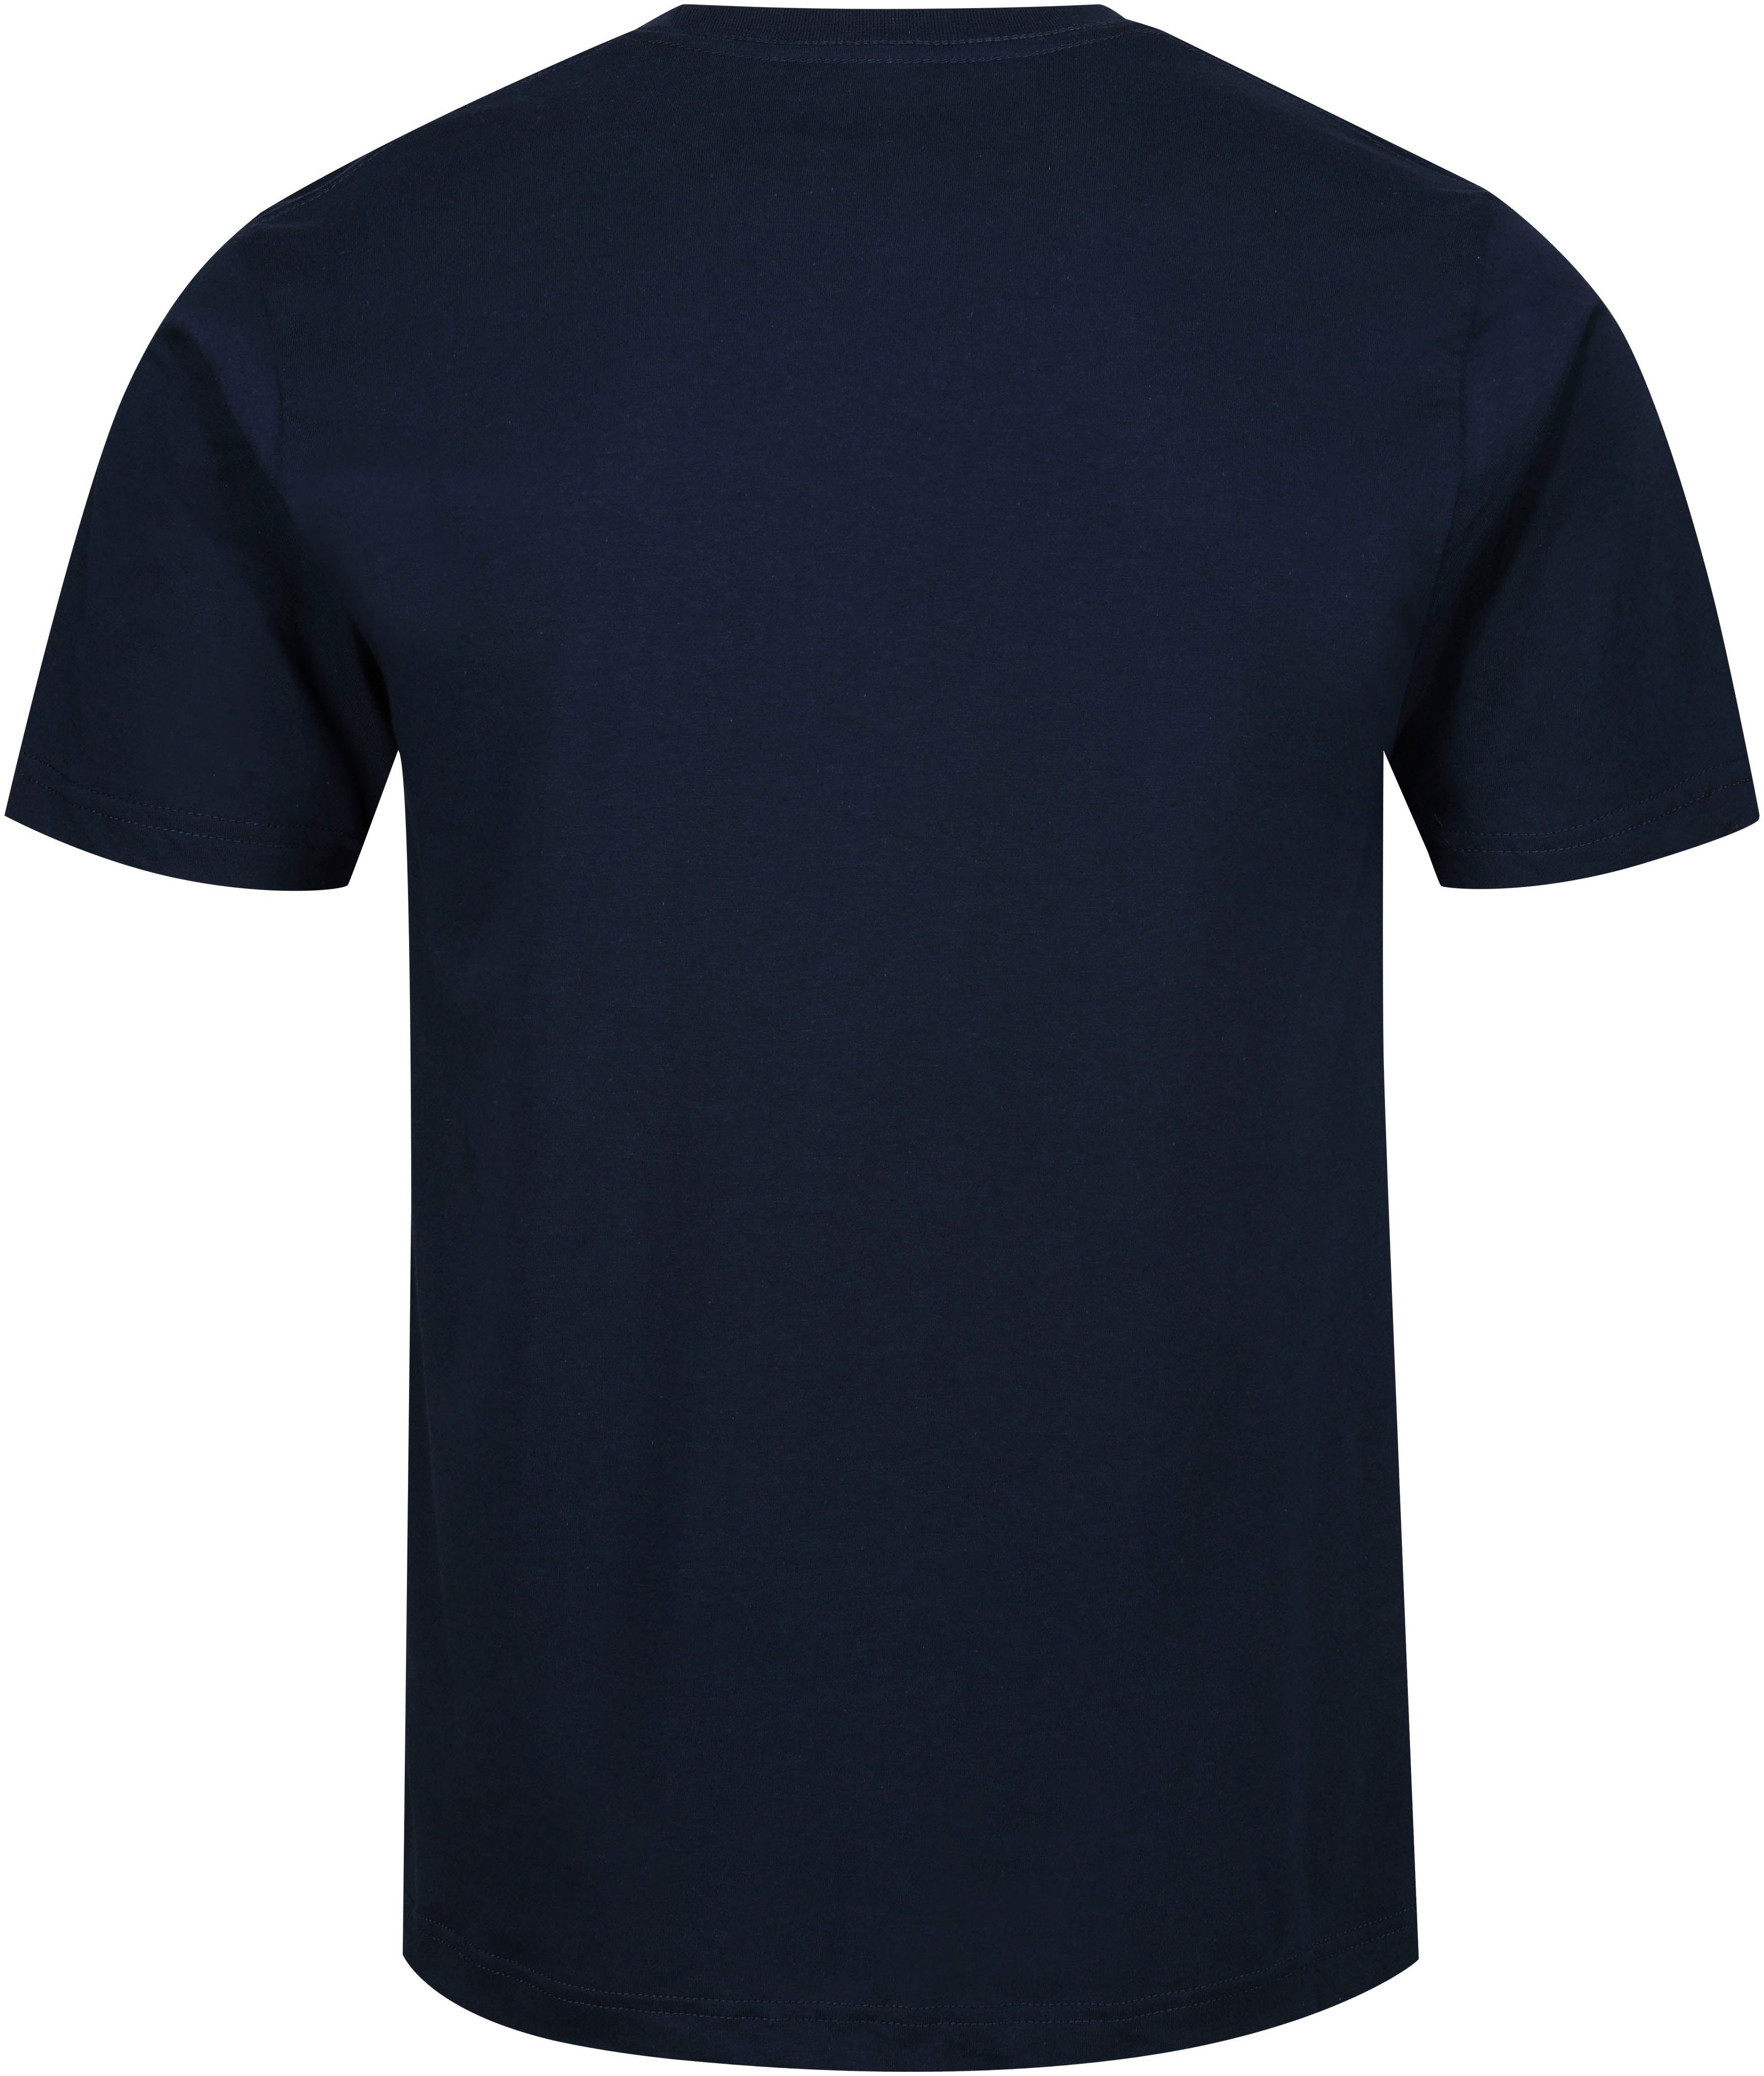 olive/charco DKNY GIANTS T-Shirt